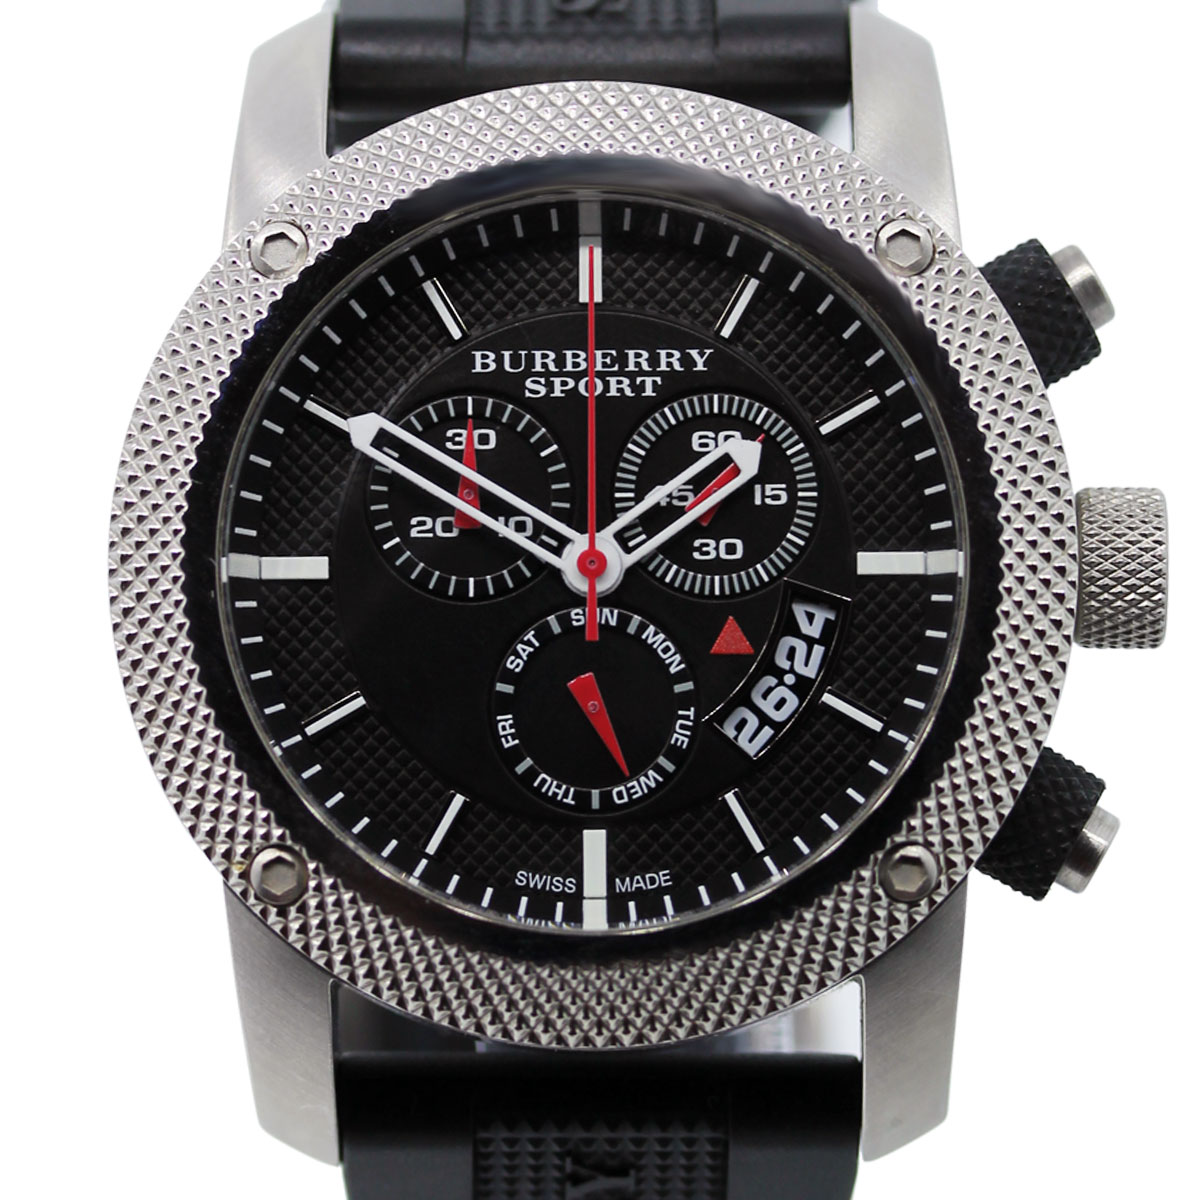 Burberry Sport BU7700 Chronograph Stainless Steel Watch